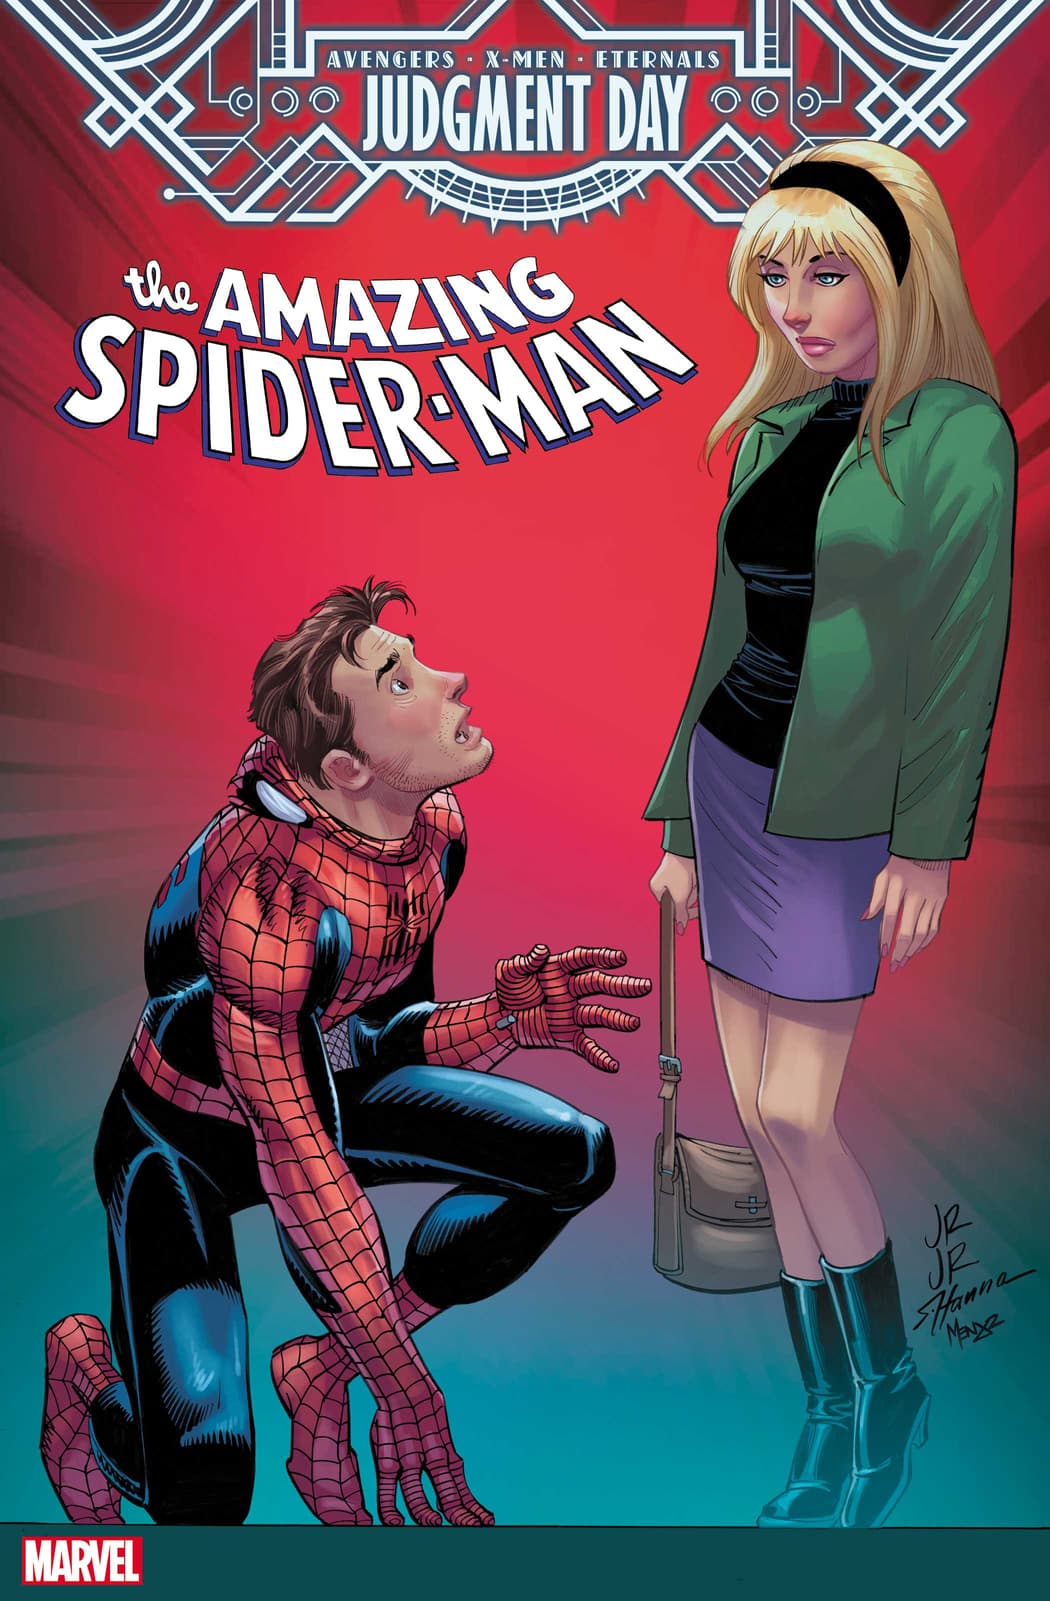 AMAZING SPIDER-MAN #10 cover by John Romita Jr.